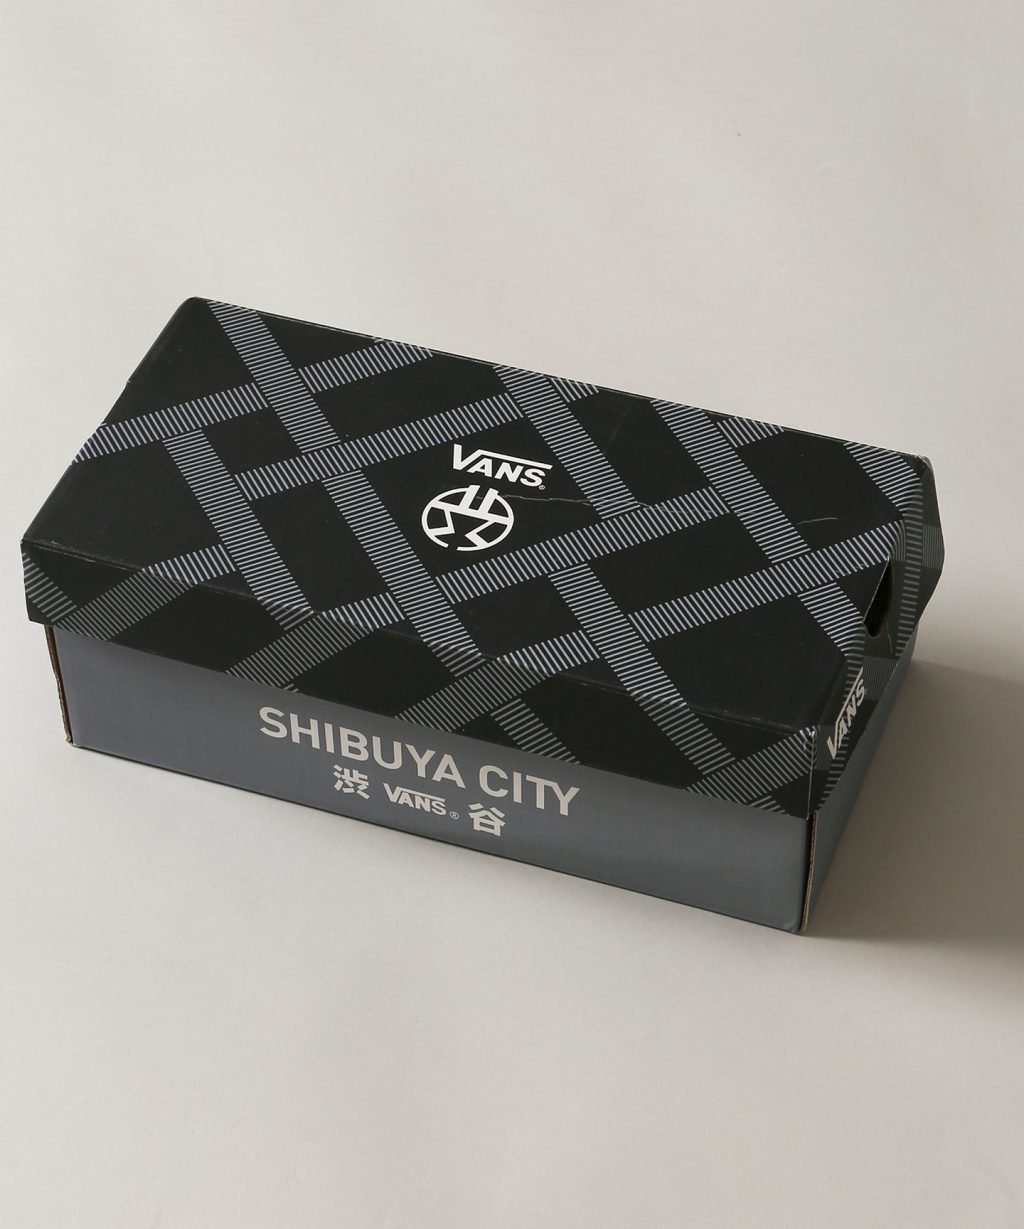 shibuya-city-vans-slip-on-collaboration-release-20180110